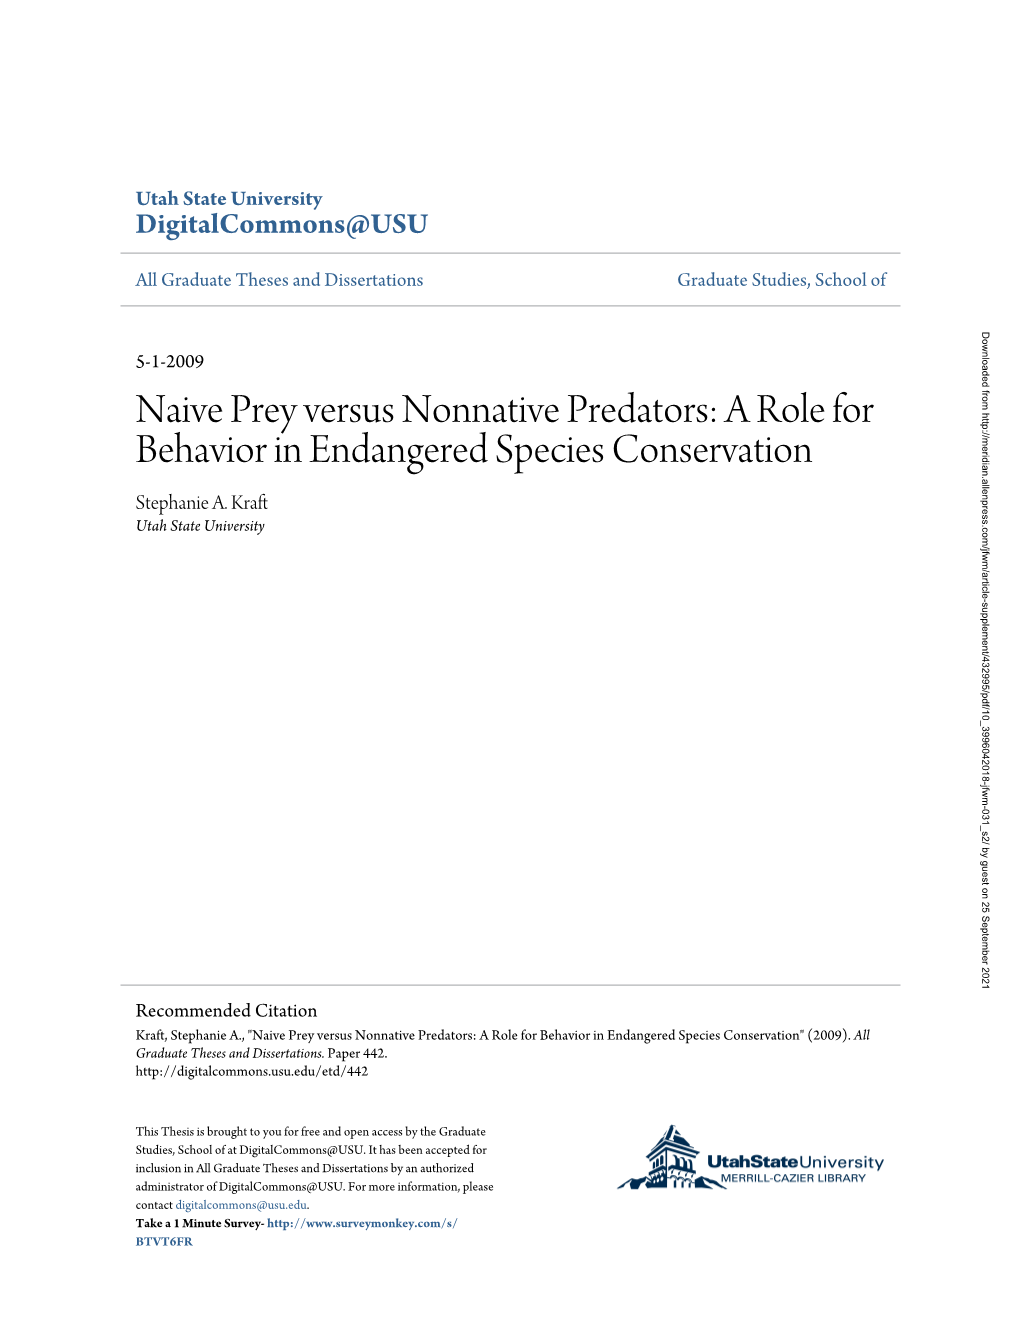 Naive Prey Versus Nonnative Predators: a Role for Behavior in Endangered Species Conservation Stephanie A